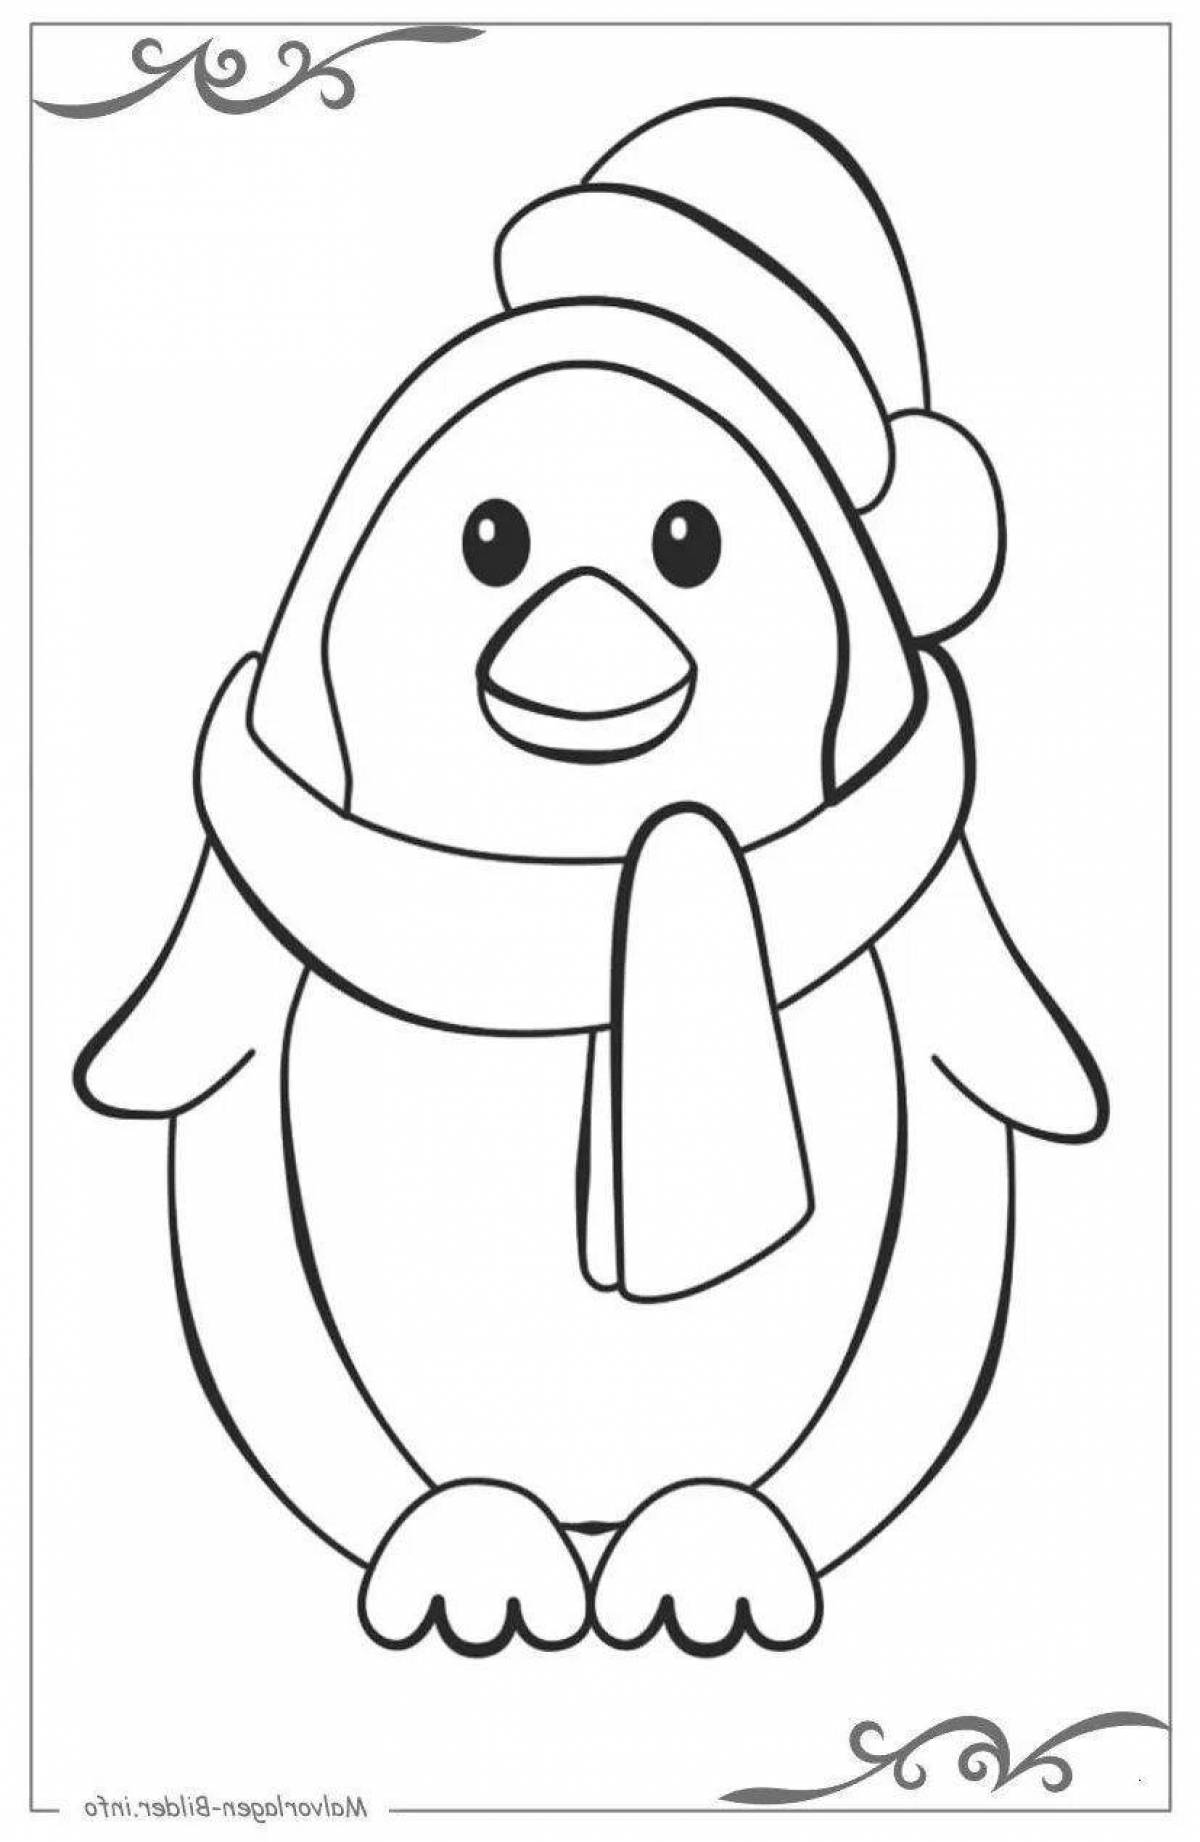 Adorable penguin coloring book